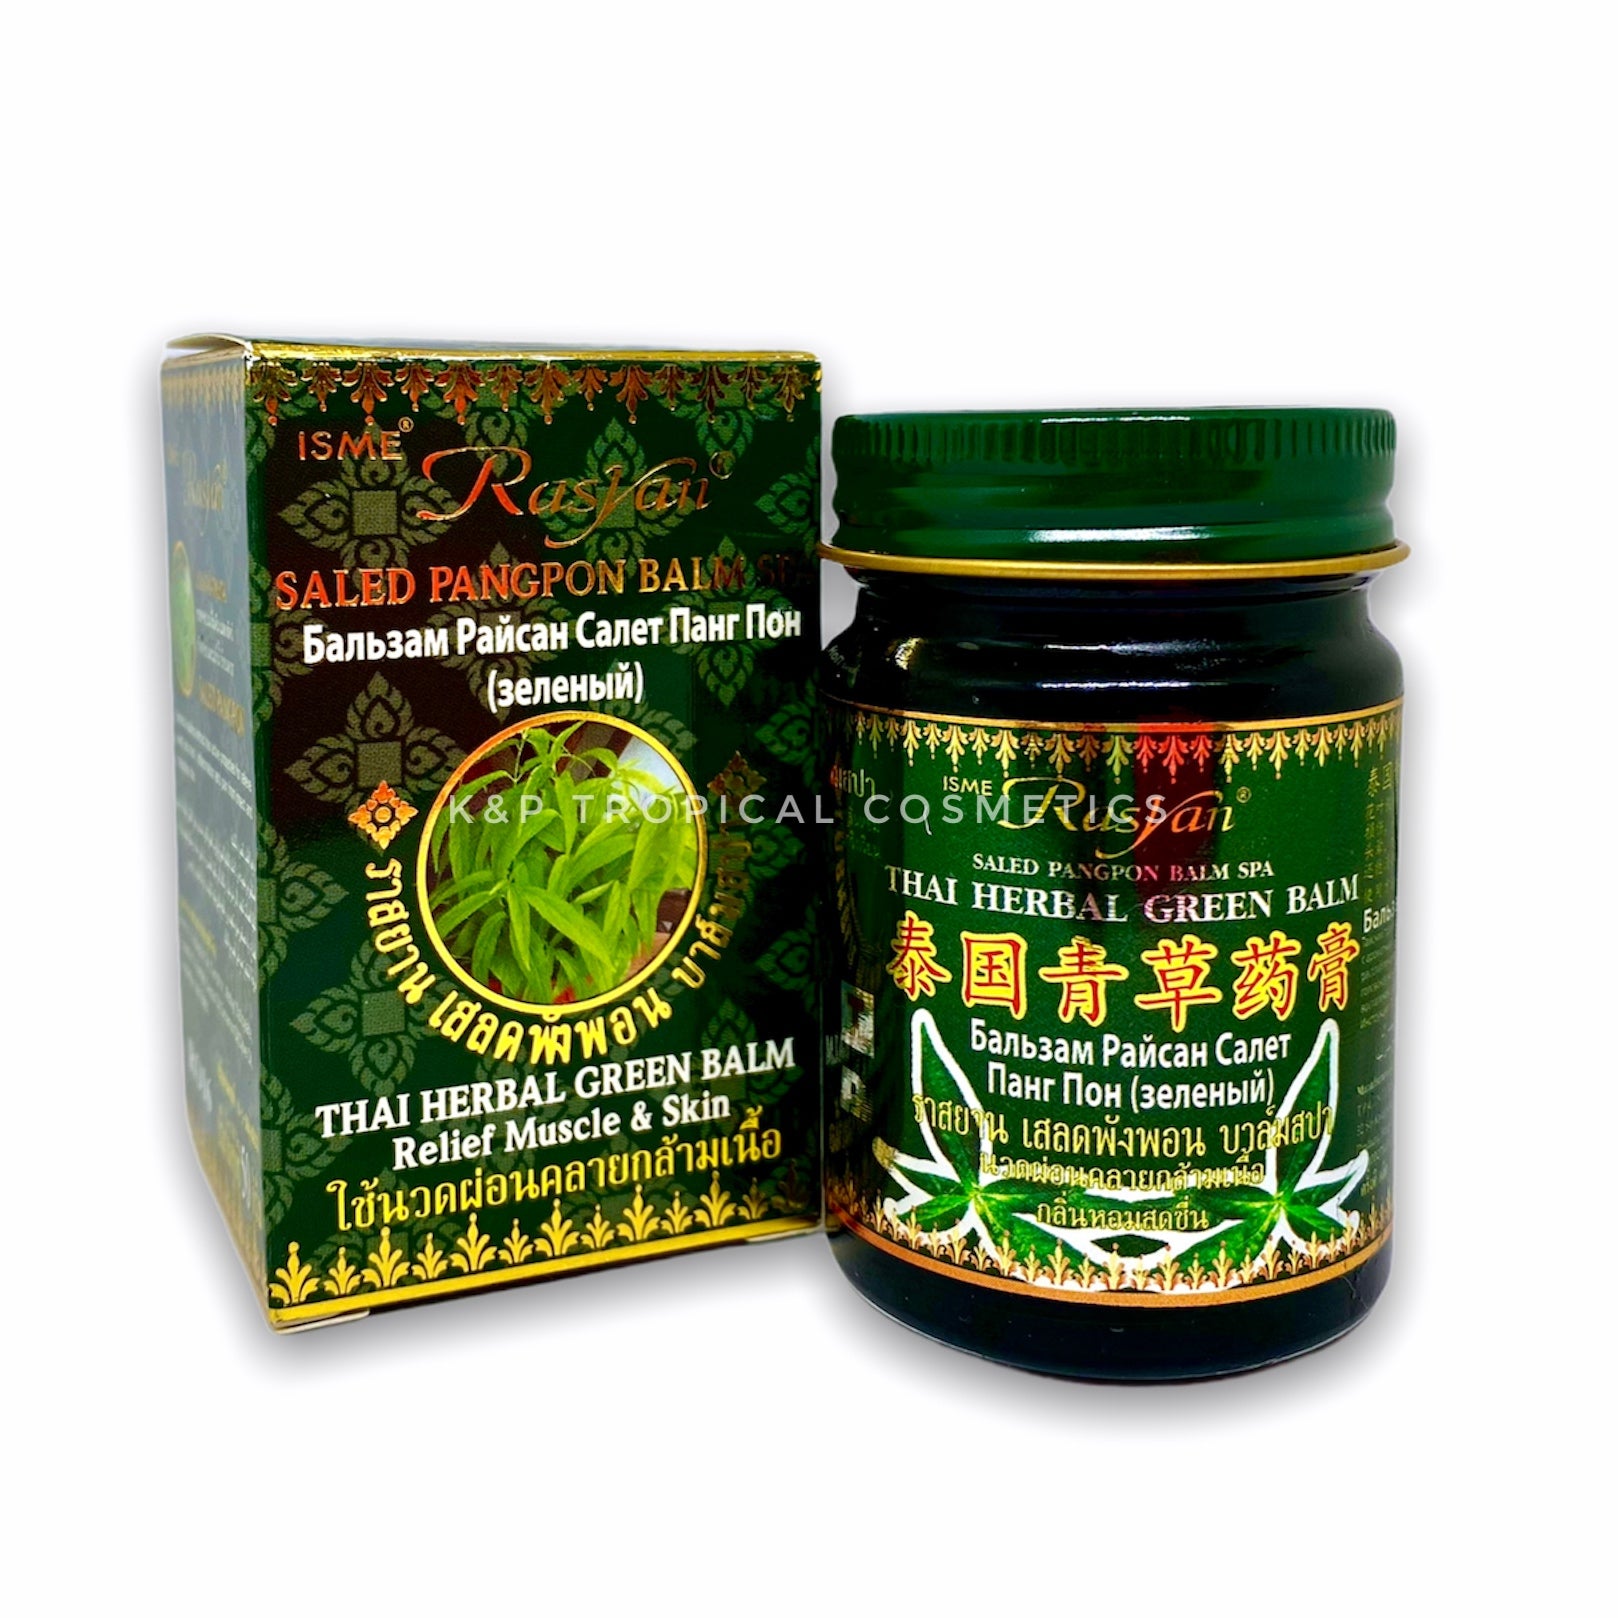 ISME Rasyan Saled Pangpon Balm Spa 50 g., Травяной бальзам против боли, воспалений и зуда 50 гр.